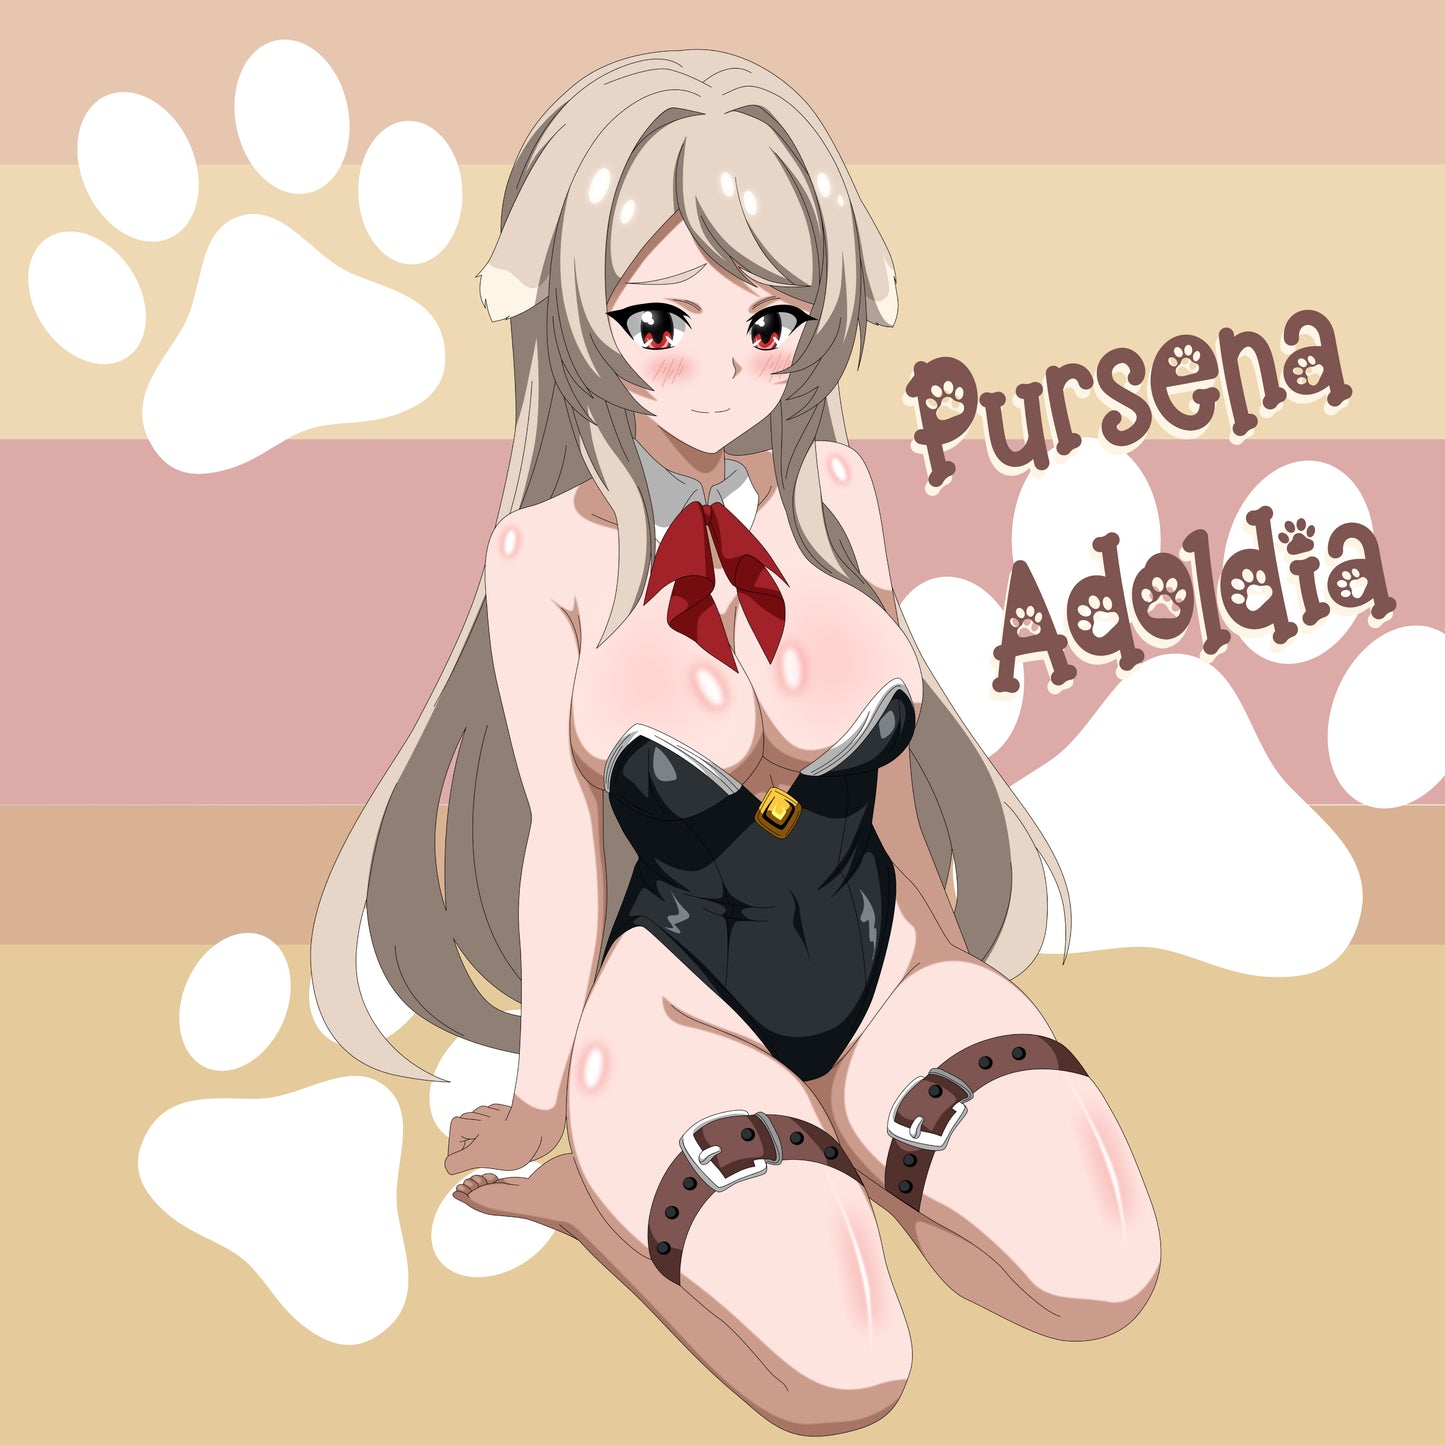 Bunny Girl Pursena Adoldia <3